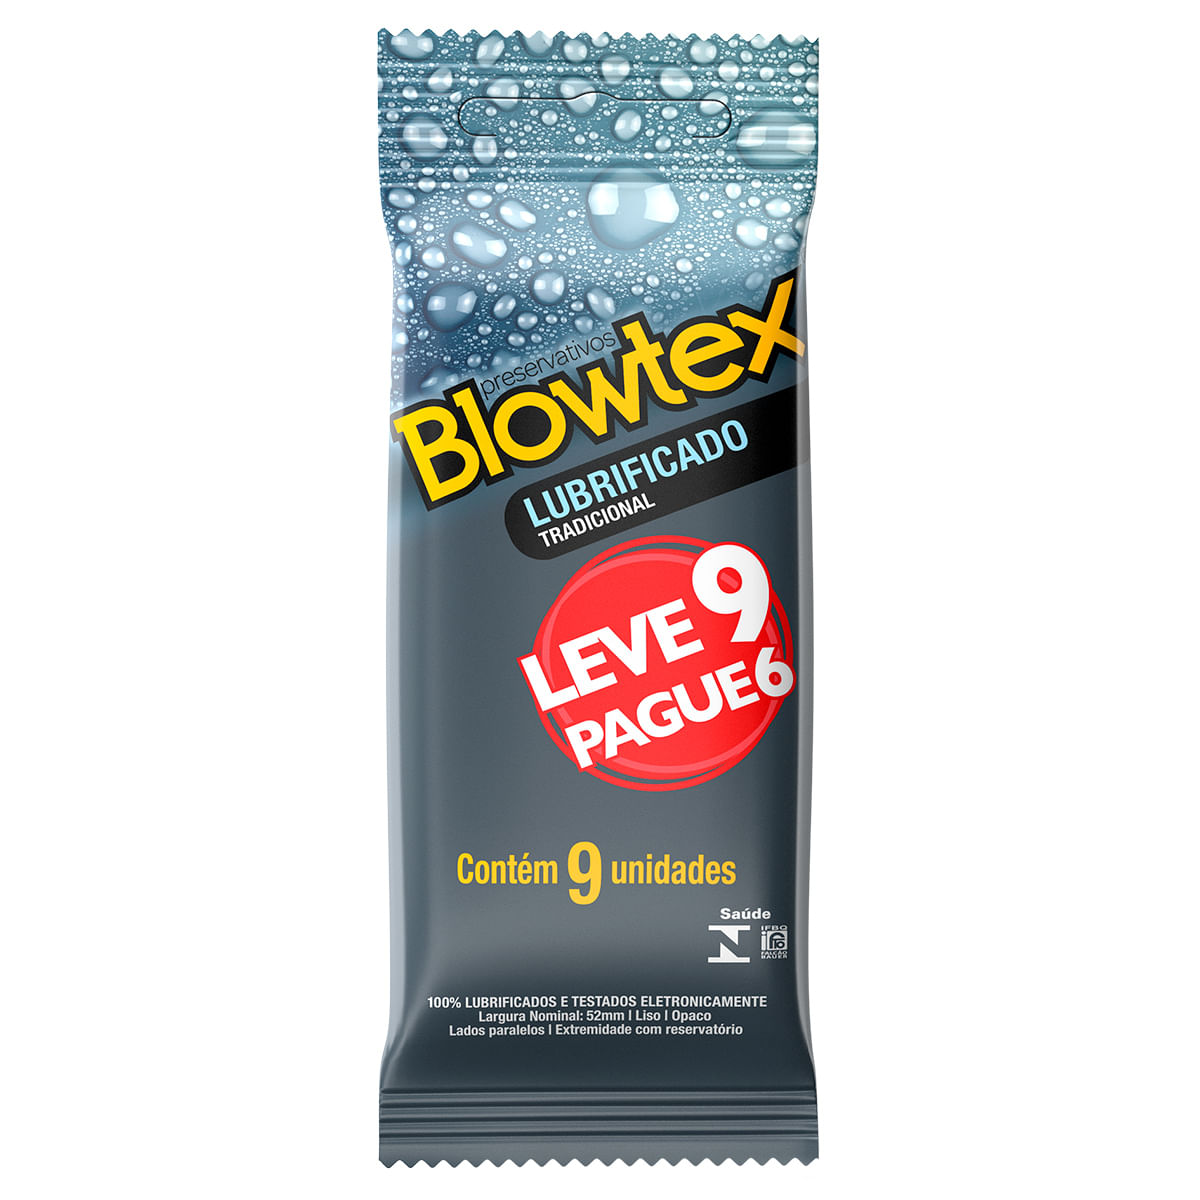 Preservativos Lubrificados Tradicional Leve 9 Pague 6 unidades Blowtex